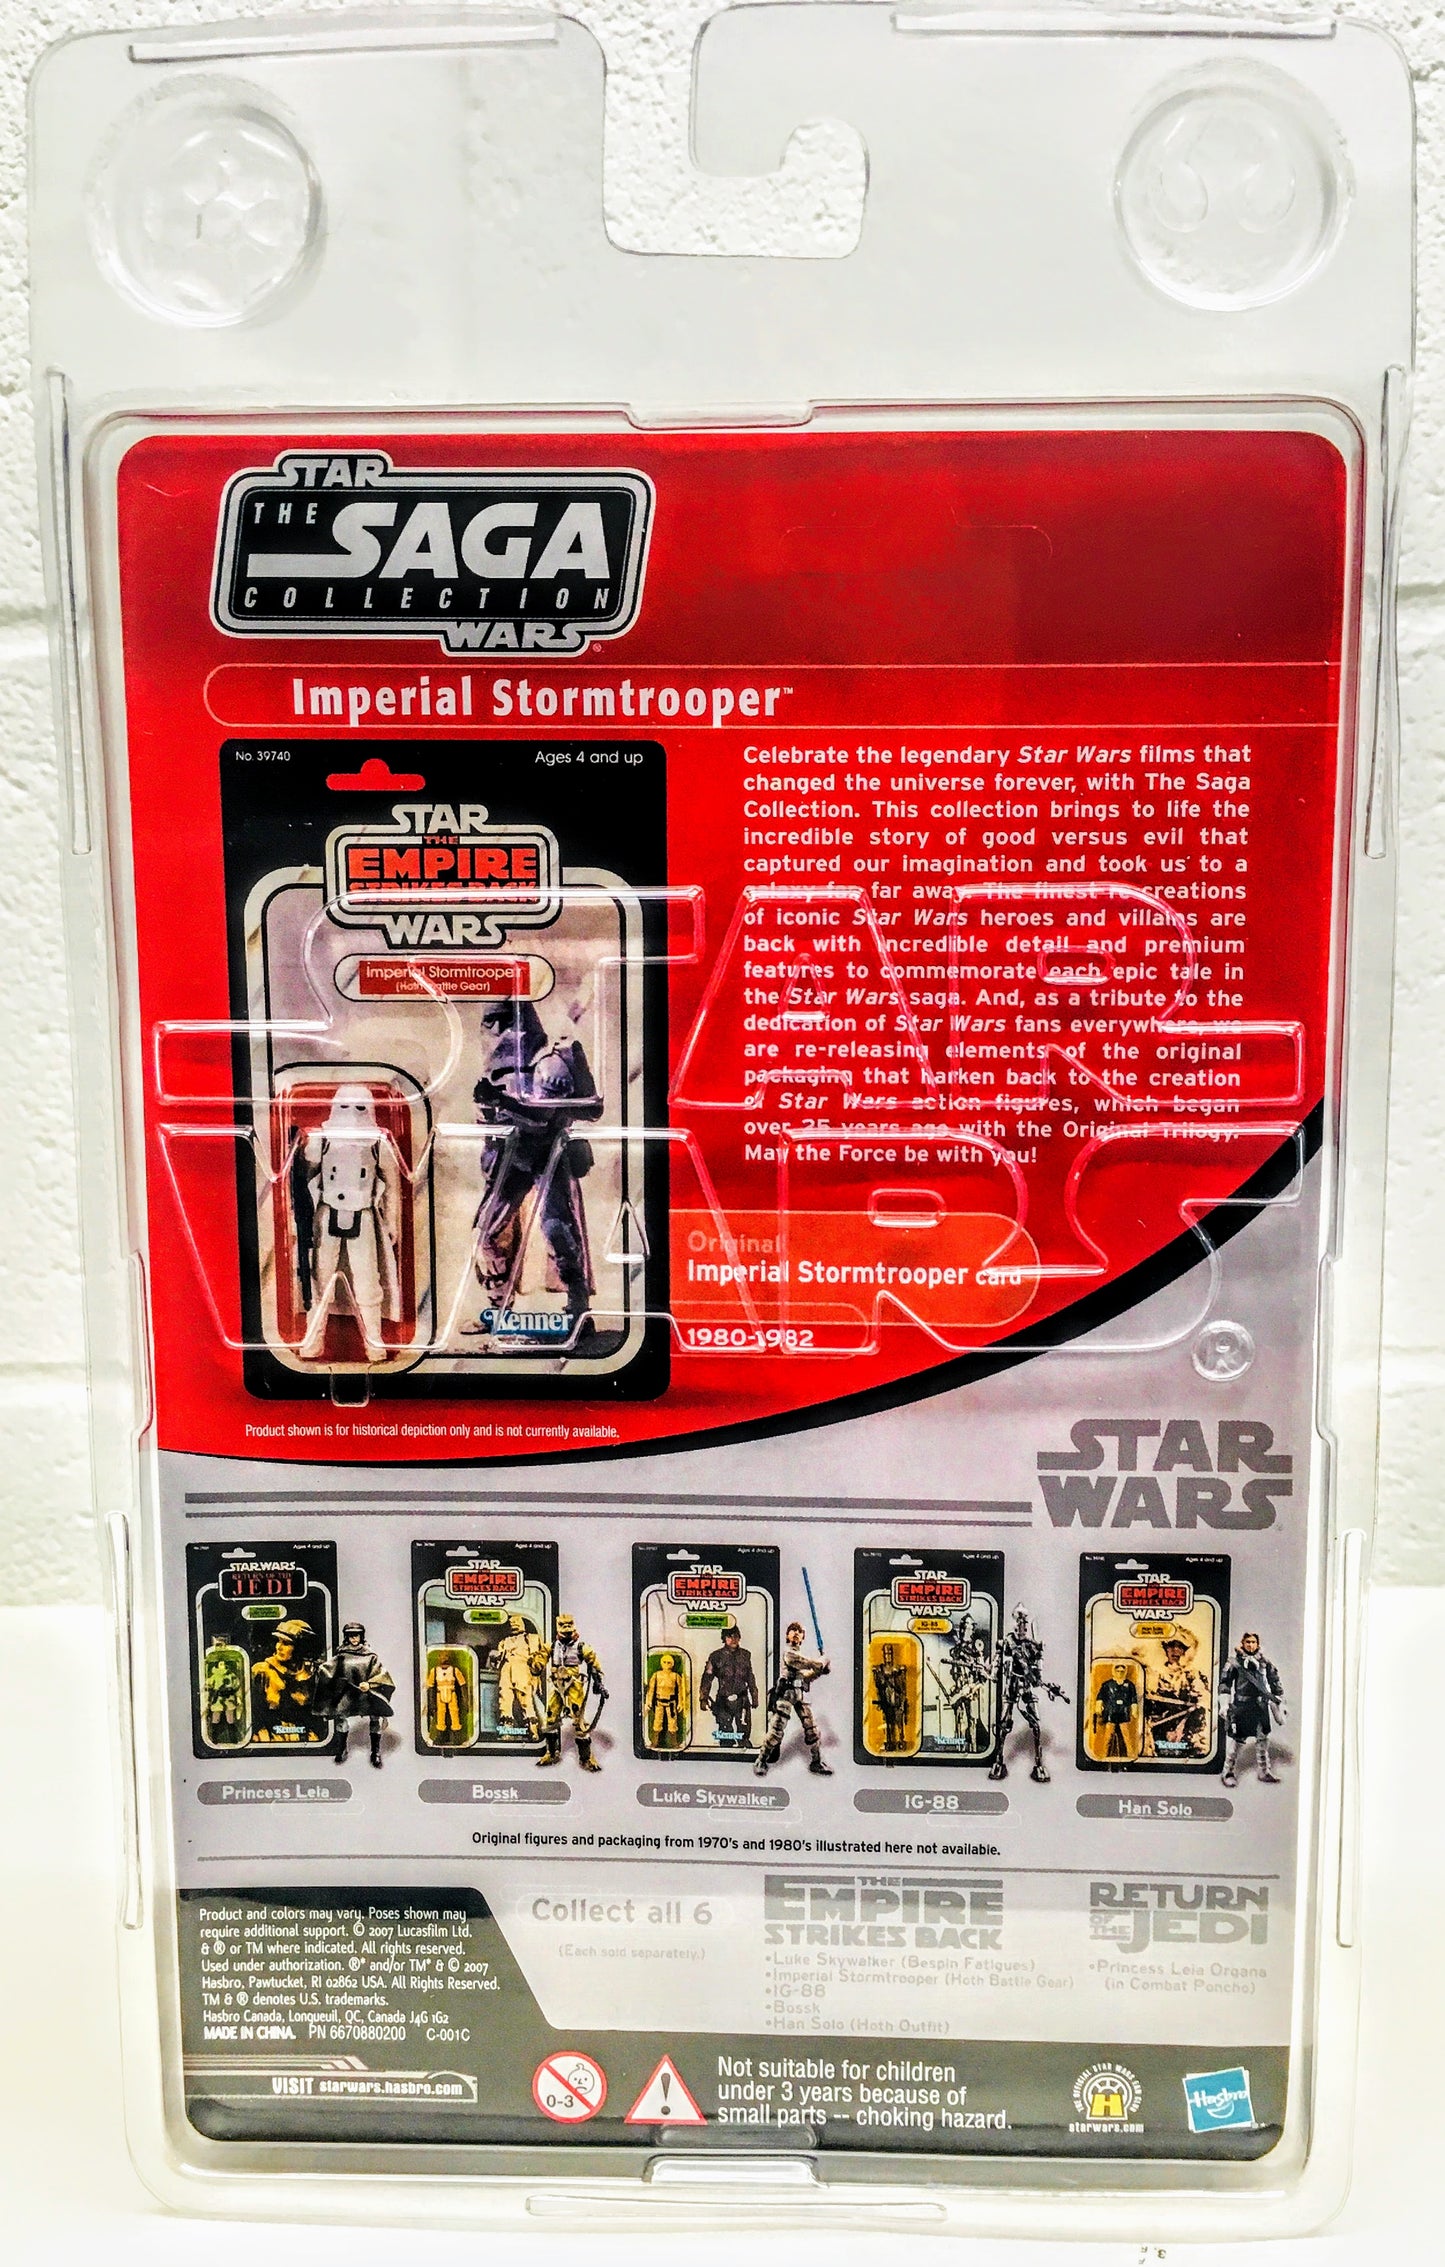 VSC Imperial Stormtrooper (Hoth Battle Gear)